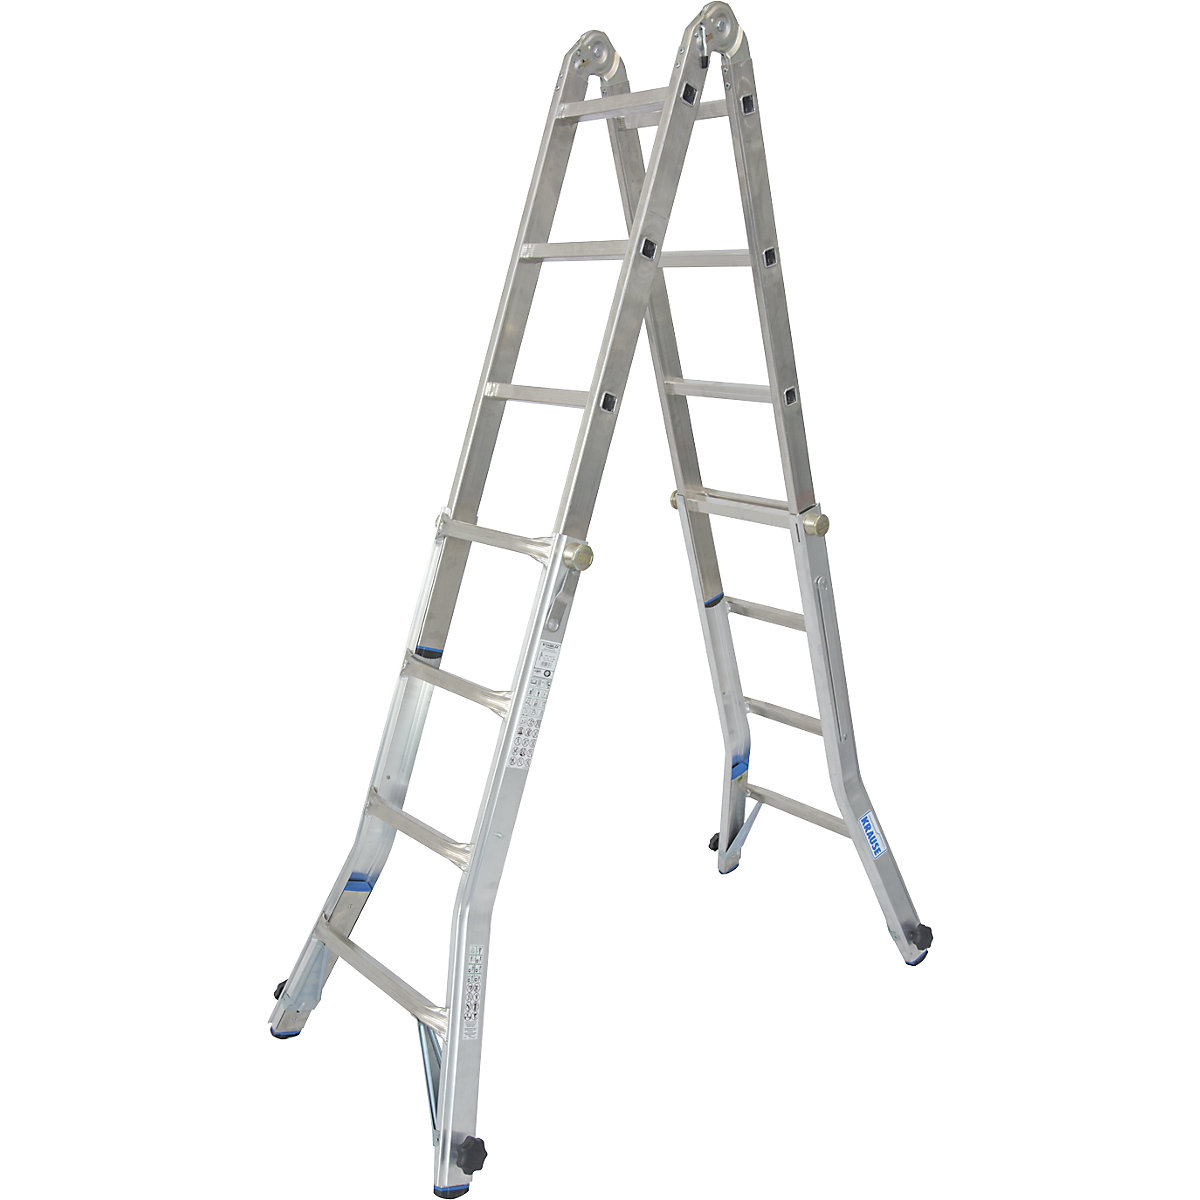 Hinged telescopic ladder – KRAUSE